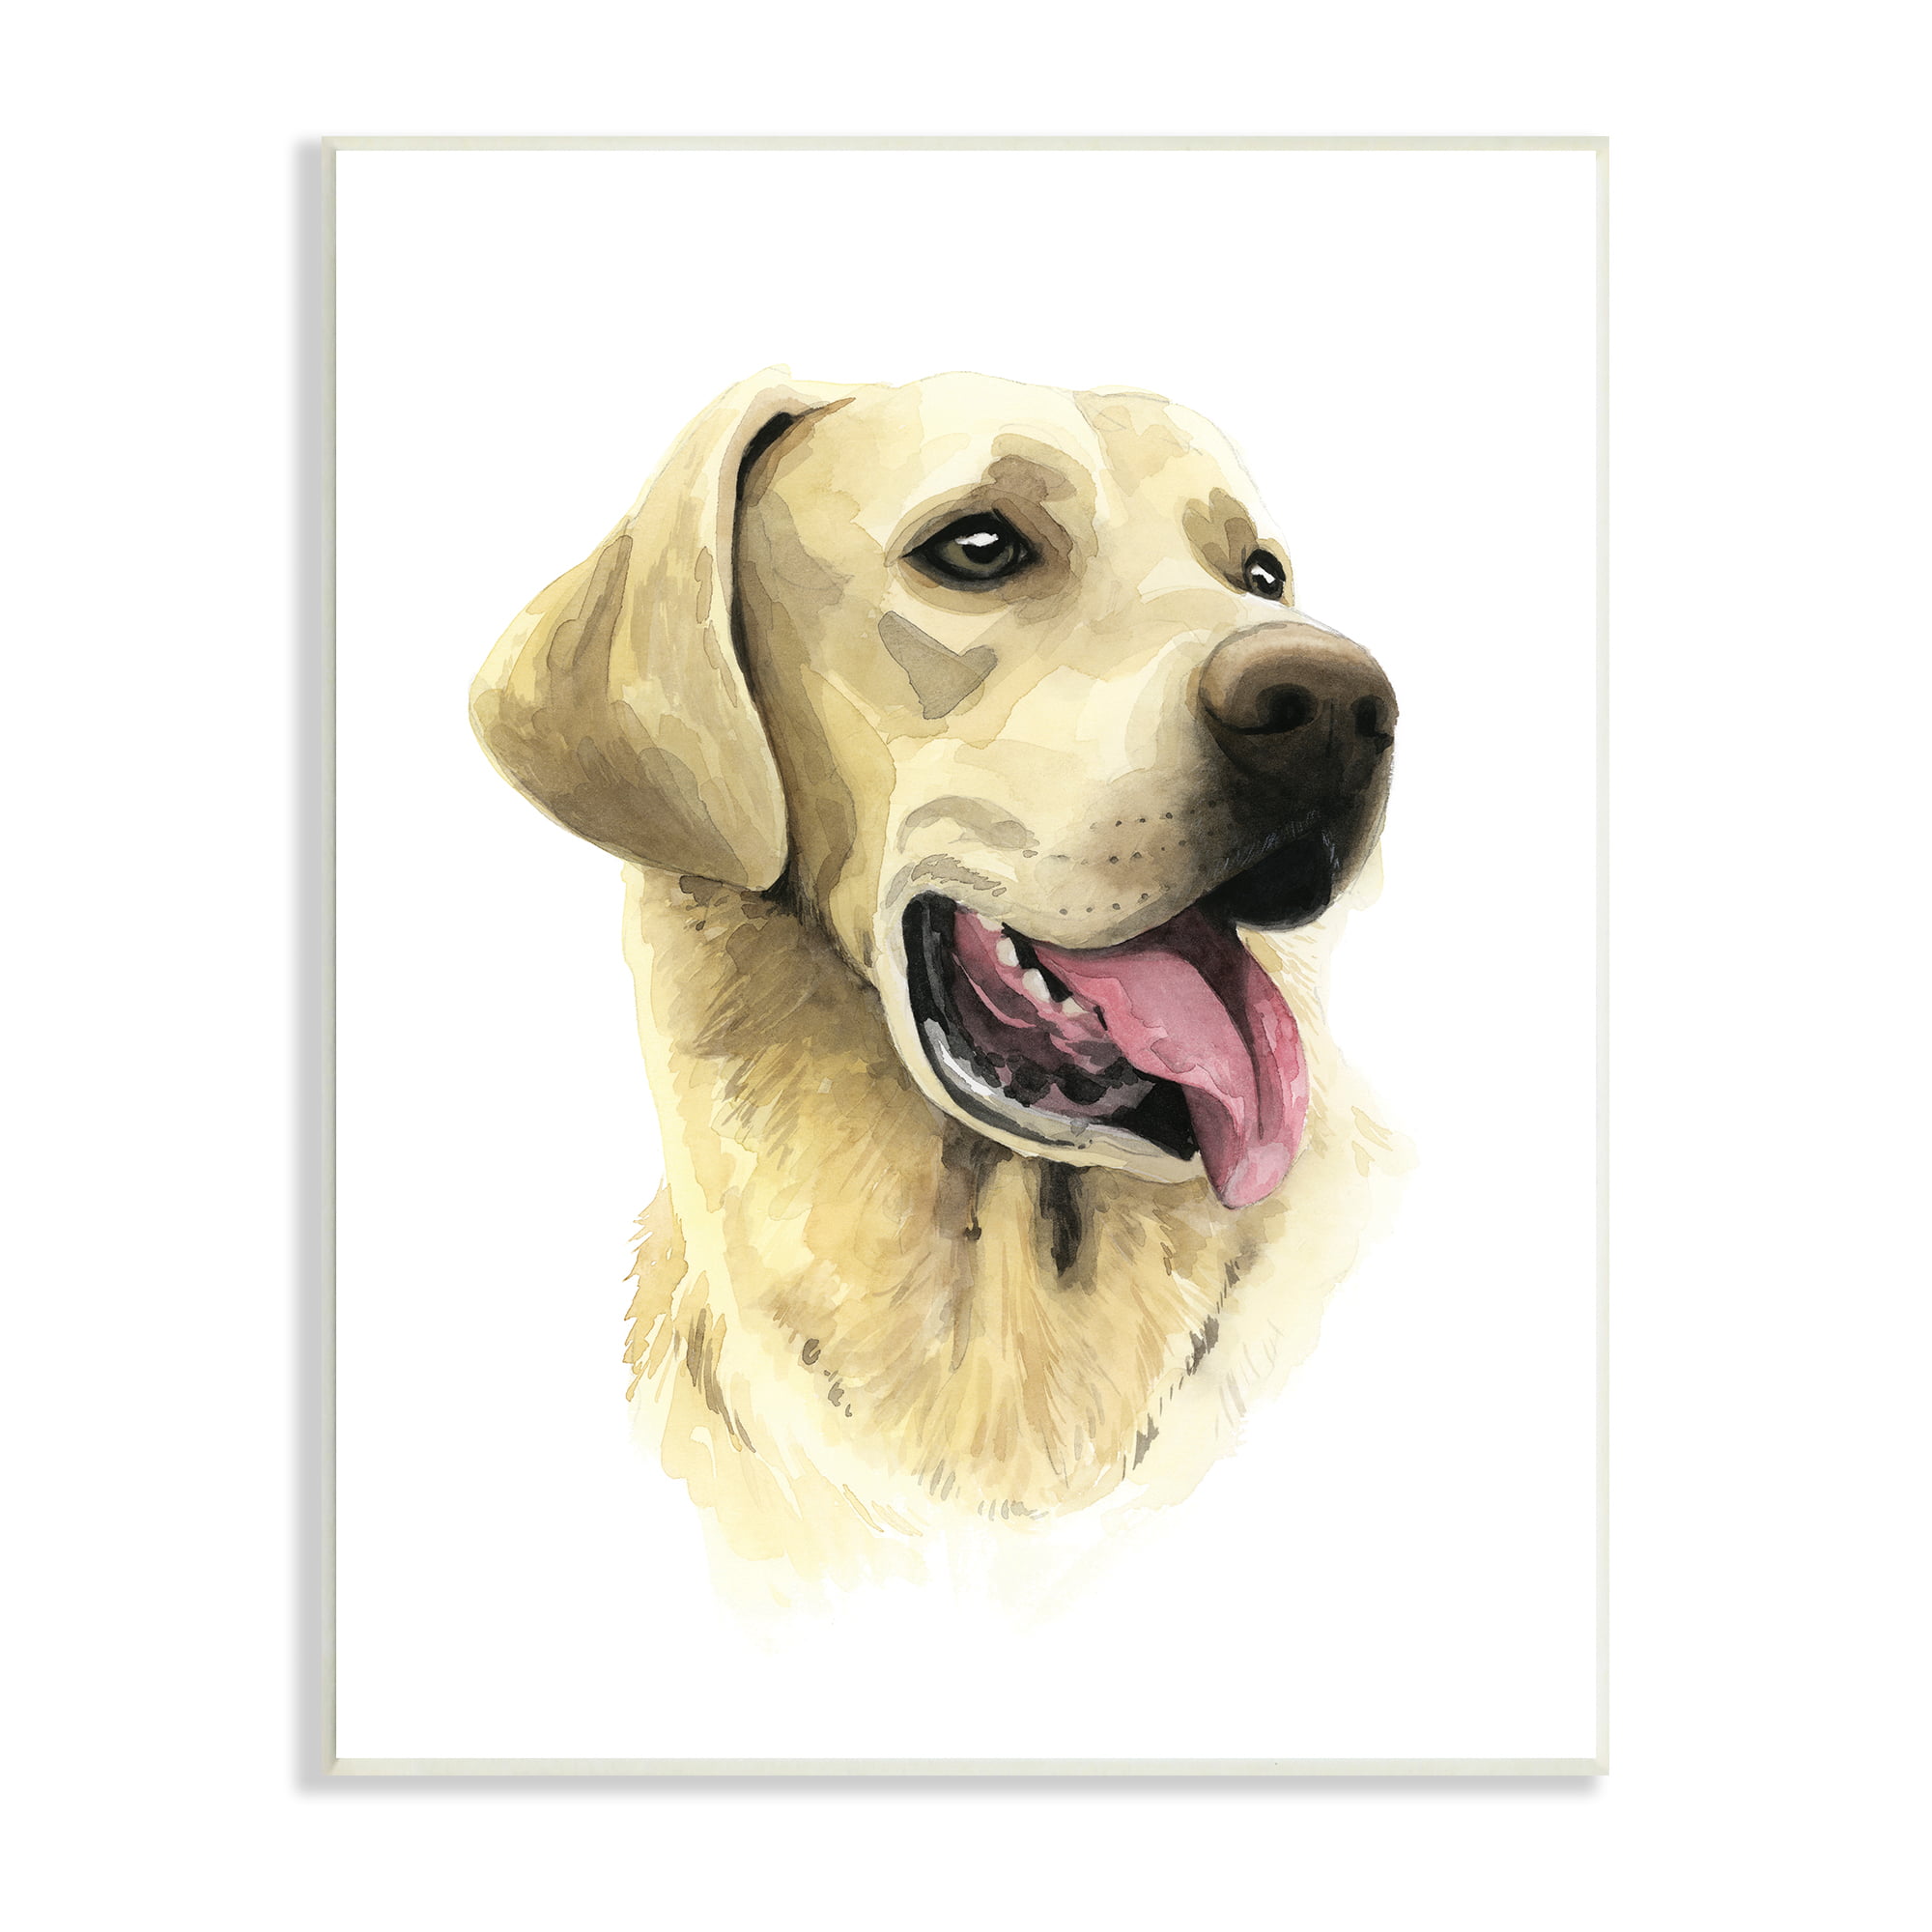 16x20 Wall Decoration Hunting Black Labrador Dog Animal Art Print Poster 